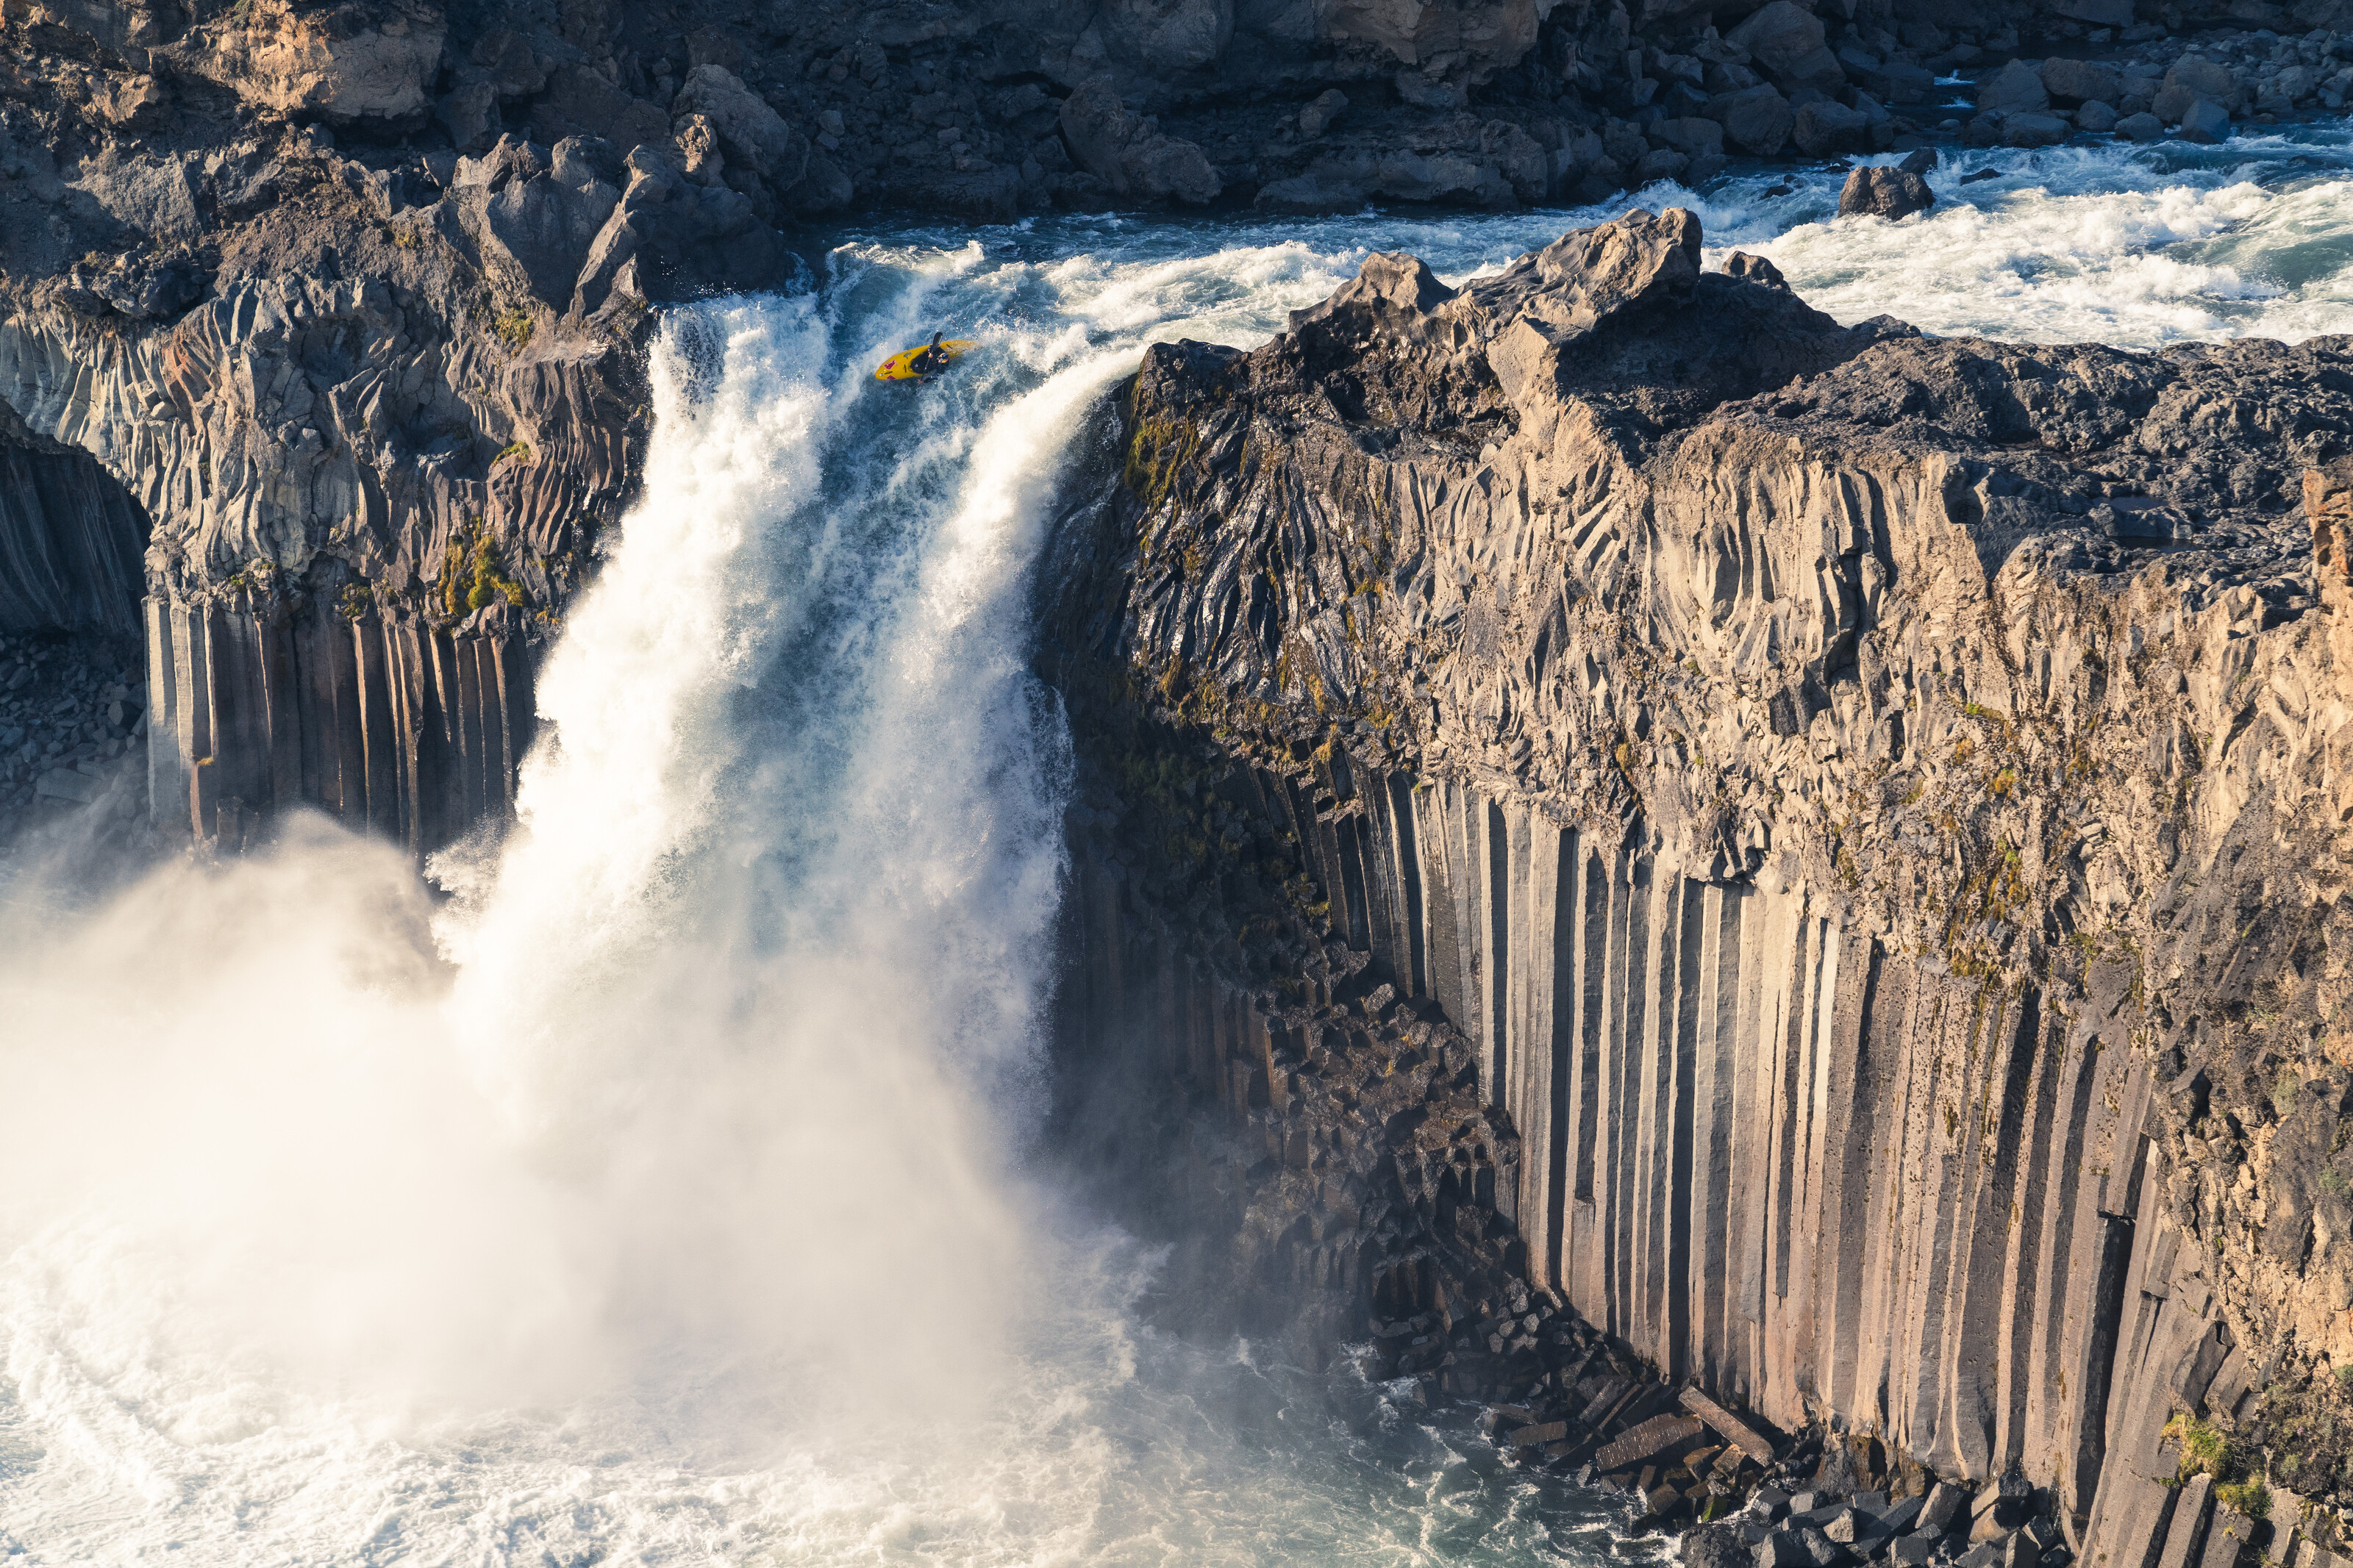 Aniol Serrasolses droping a waterfall in Aldeyjarfoss, Iceland